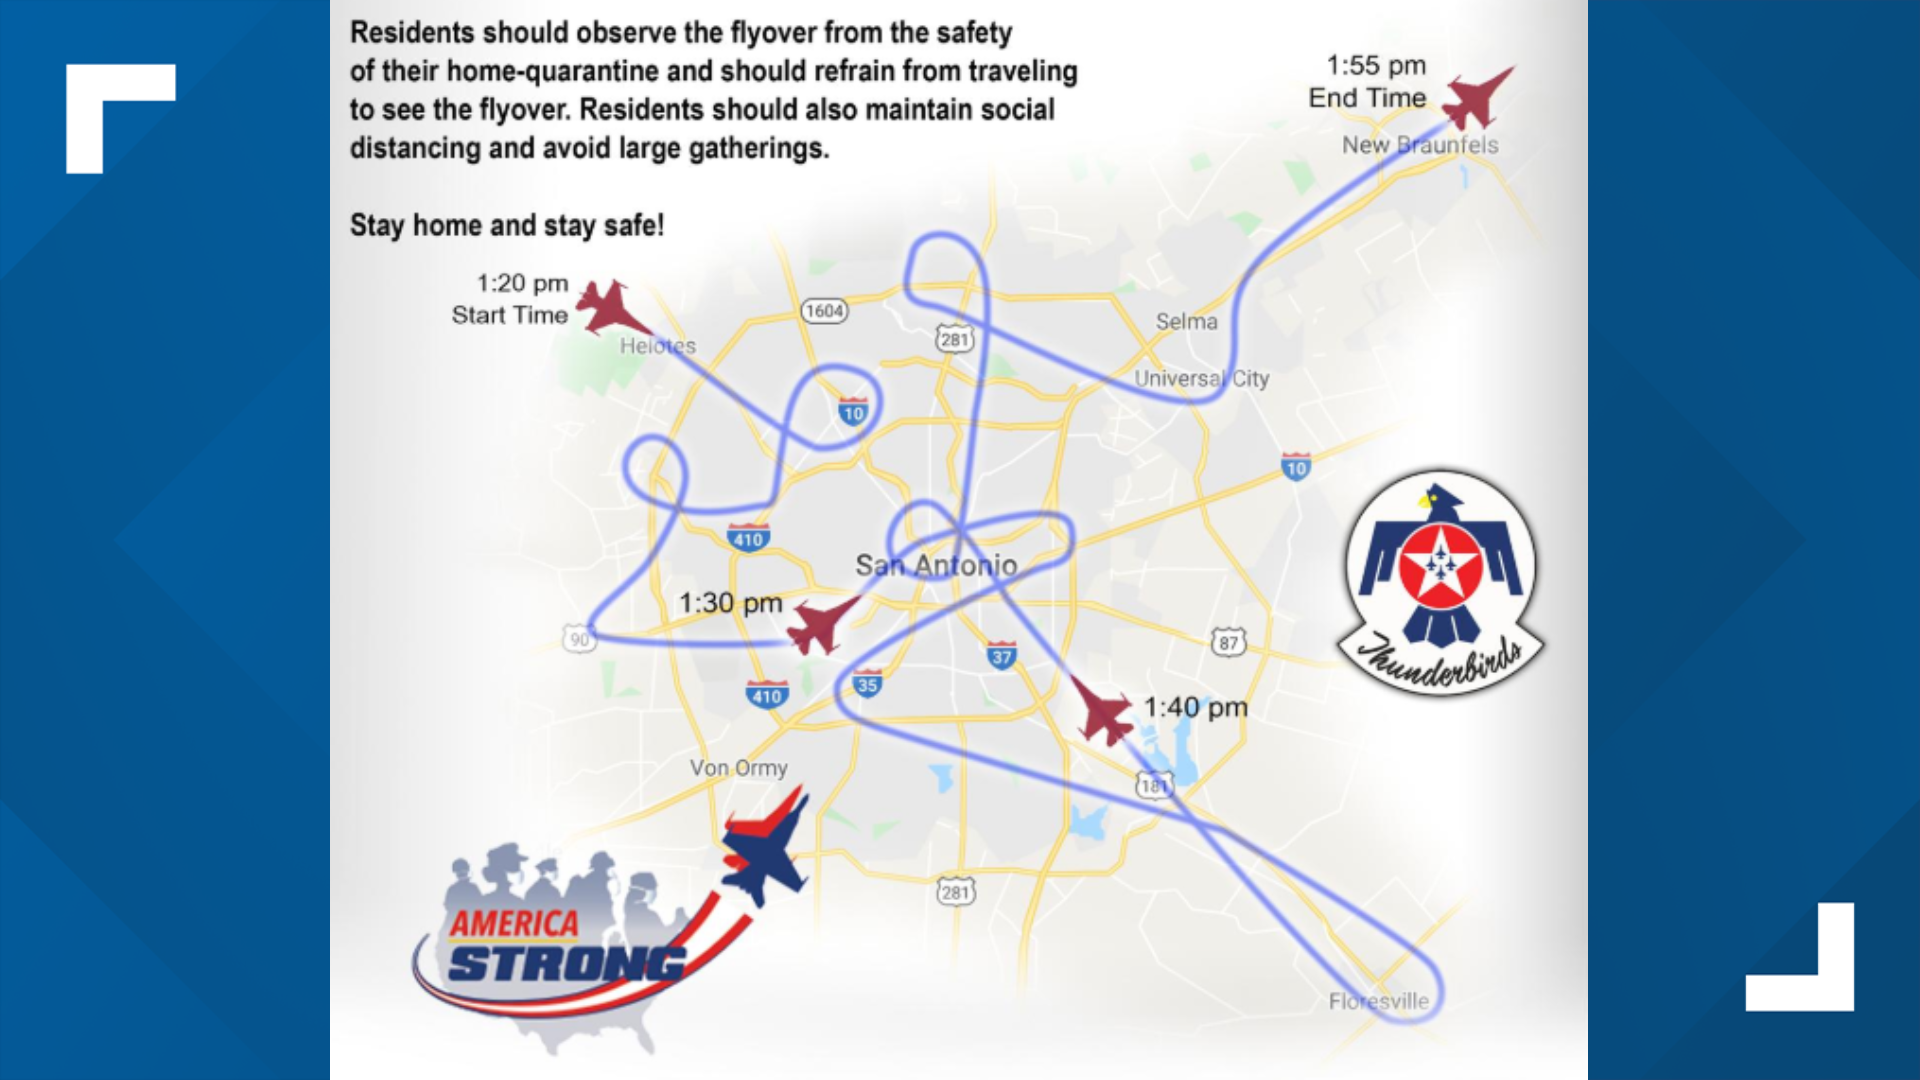 Here's the Thunderbirds' flight path over San Antonio on Wednesday